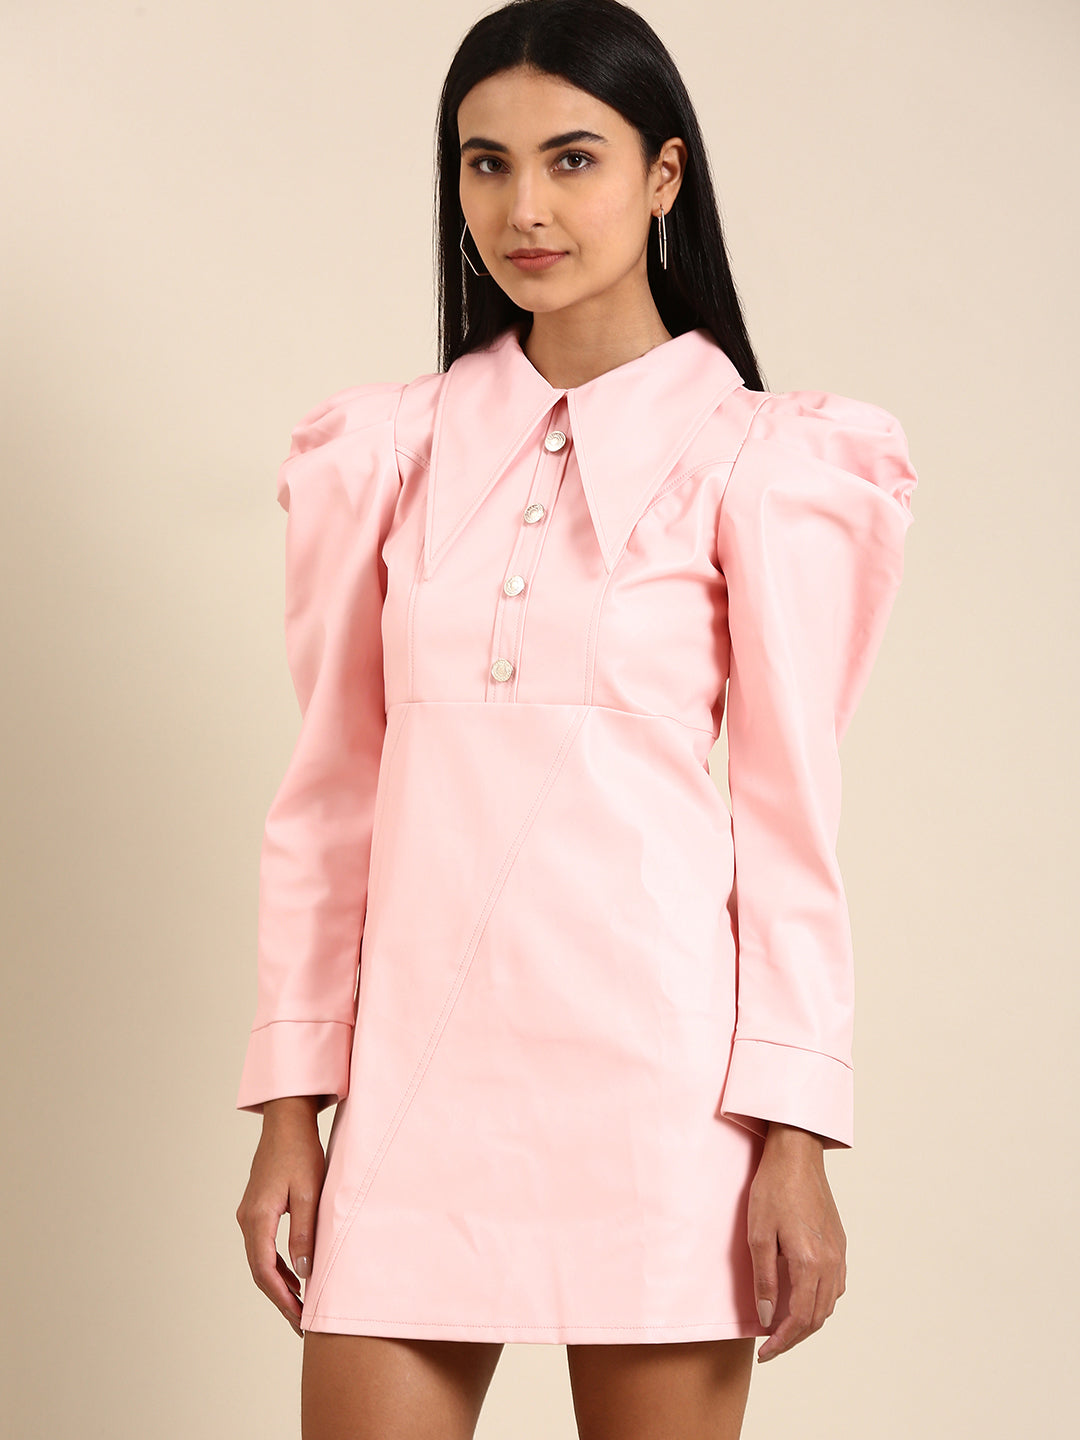 Athena Pink A-Line Dress - Athena Lifestyle